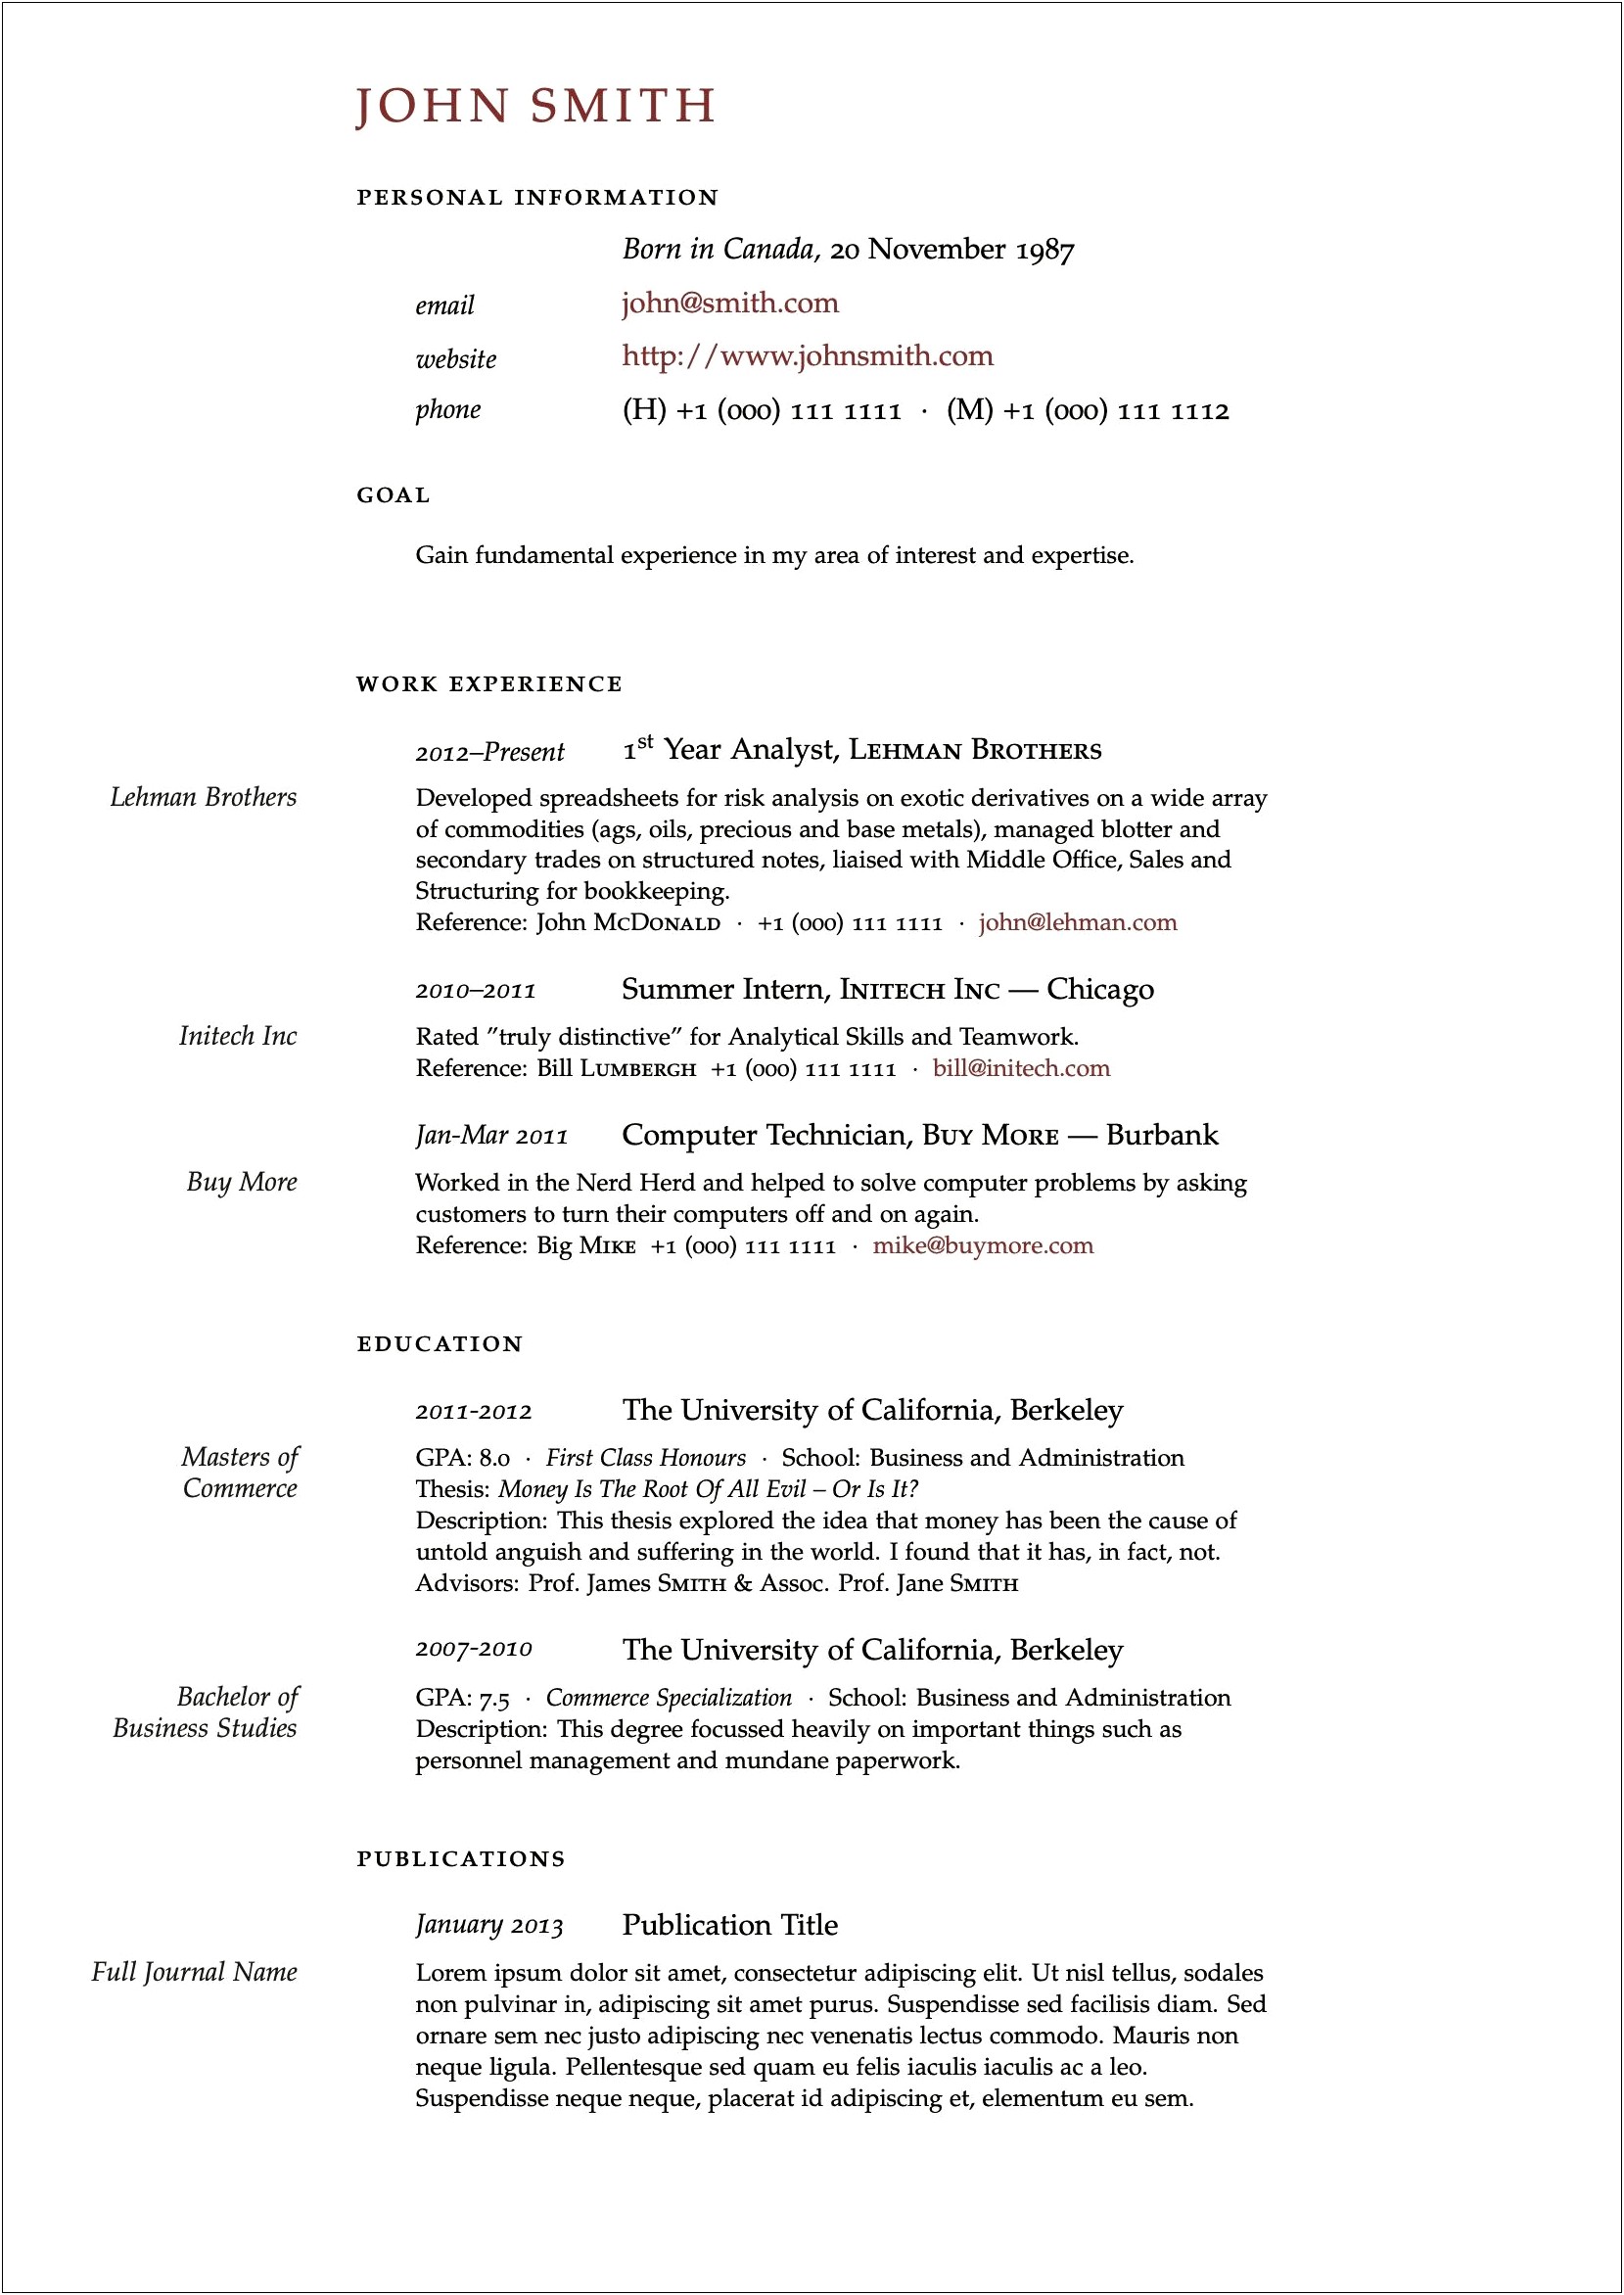 Resume Format For B School Applications